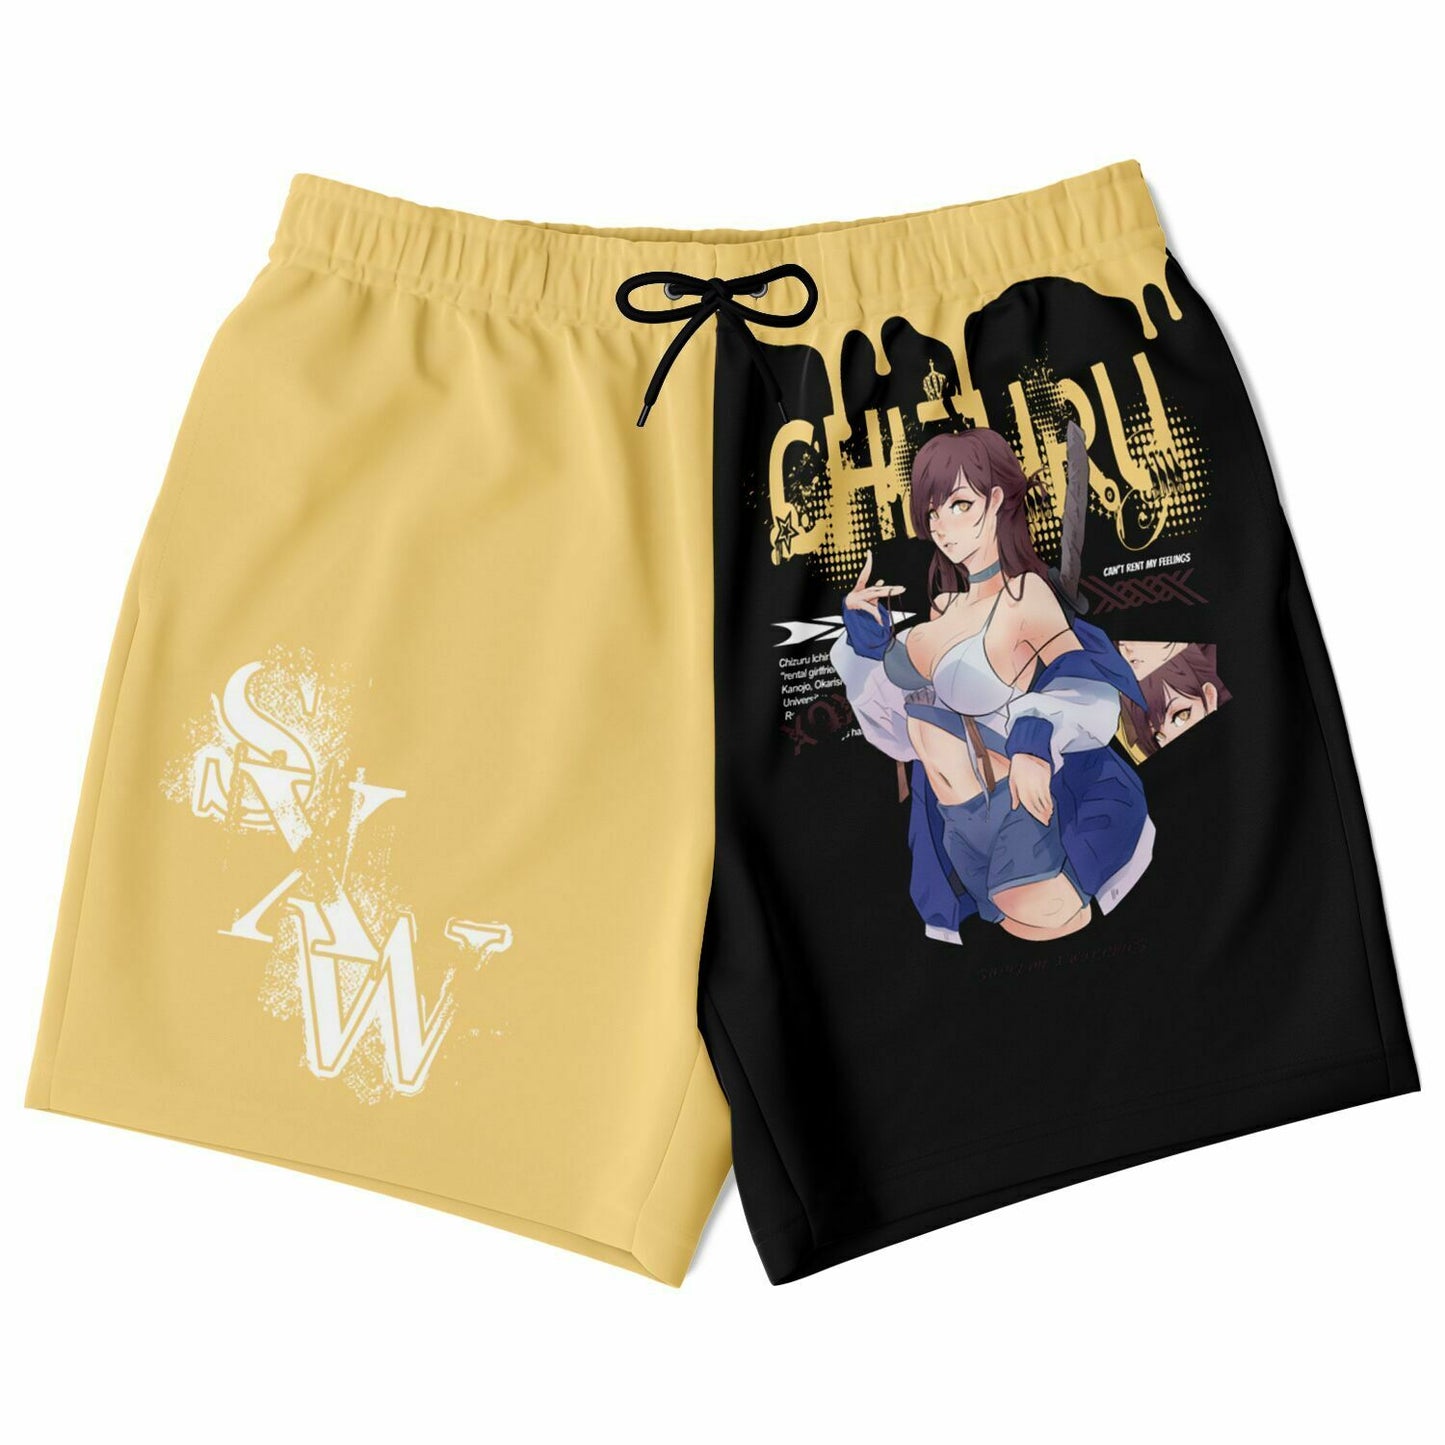 Chizuru Shorts